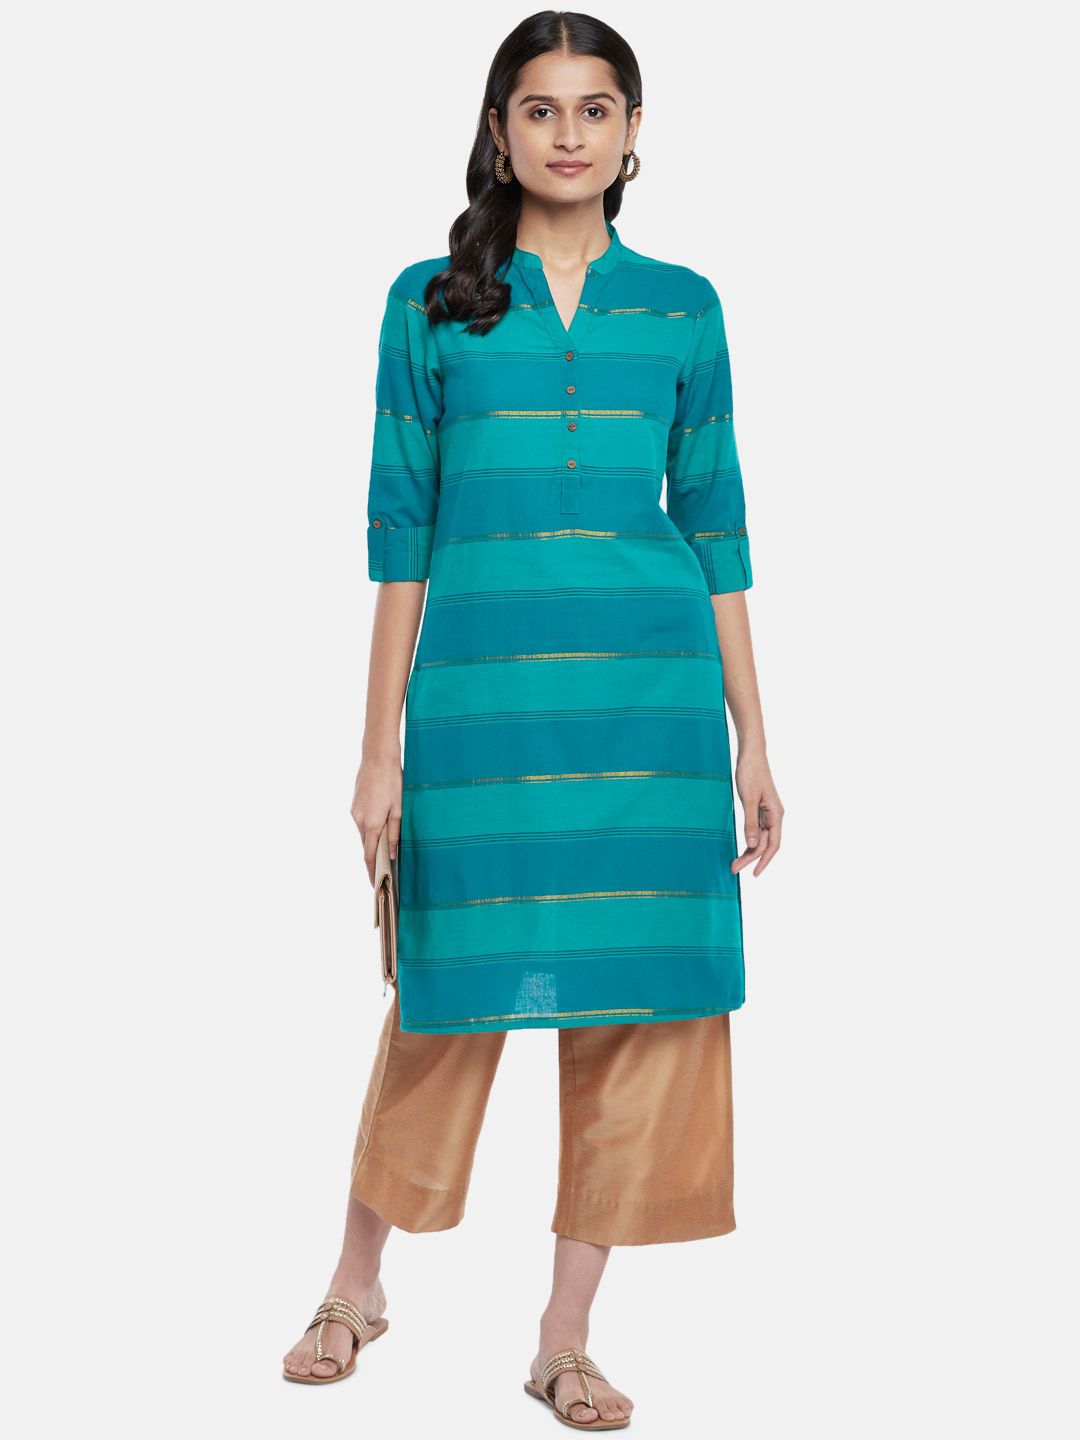 RANGMANCH BY PANTALOONS Women Teal Blue & Sea Green Striped Cotton Straight Kurta Price in India